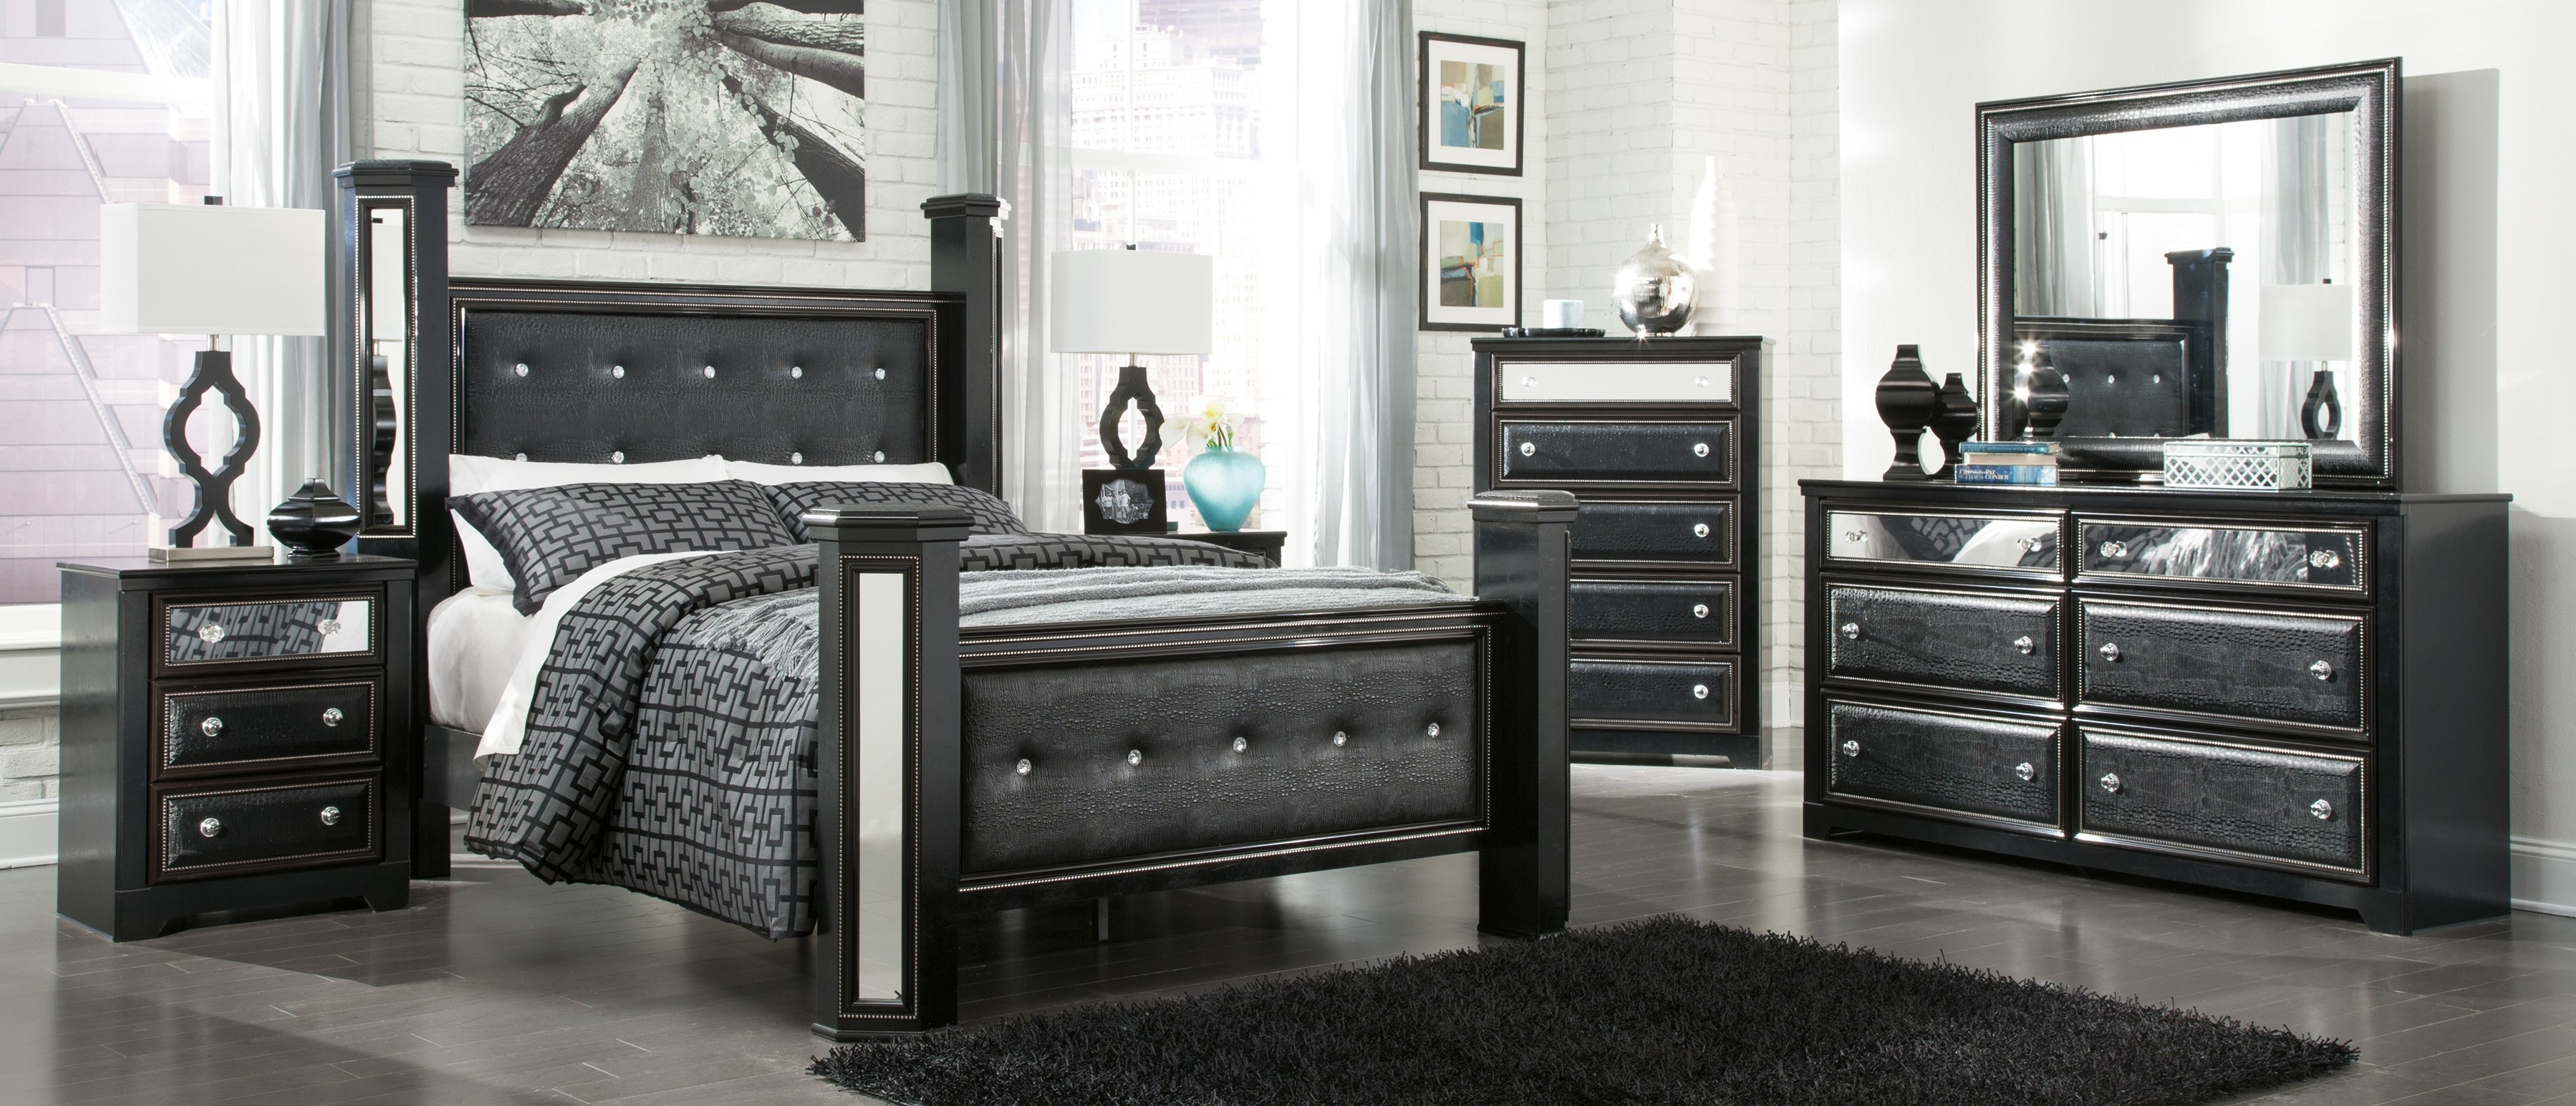 Bedroom Black Queen Bedroom Furniture Full Room Furniture Sets Pine intended for size 3597 X 1544